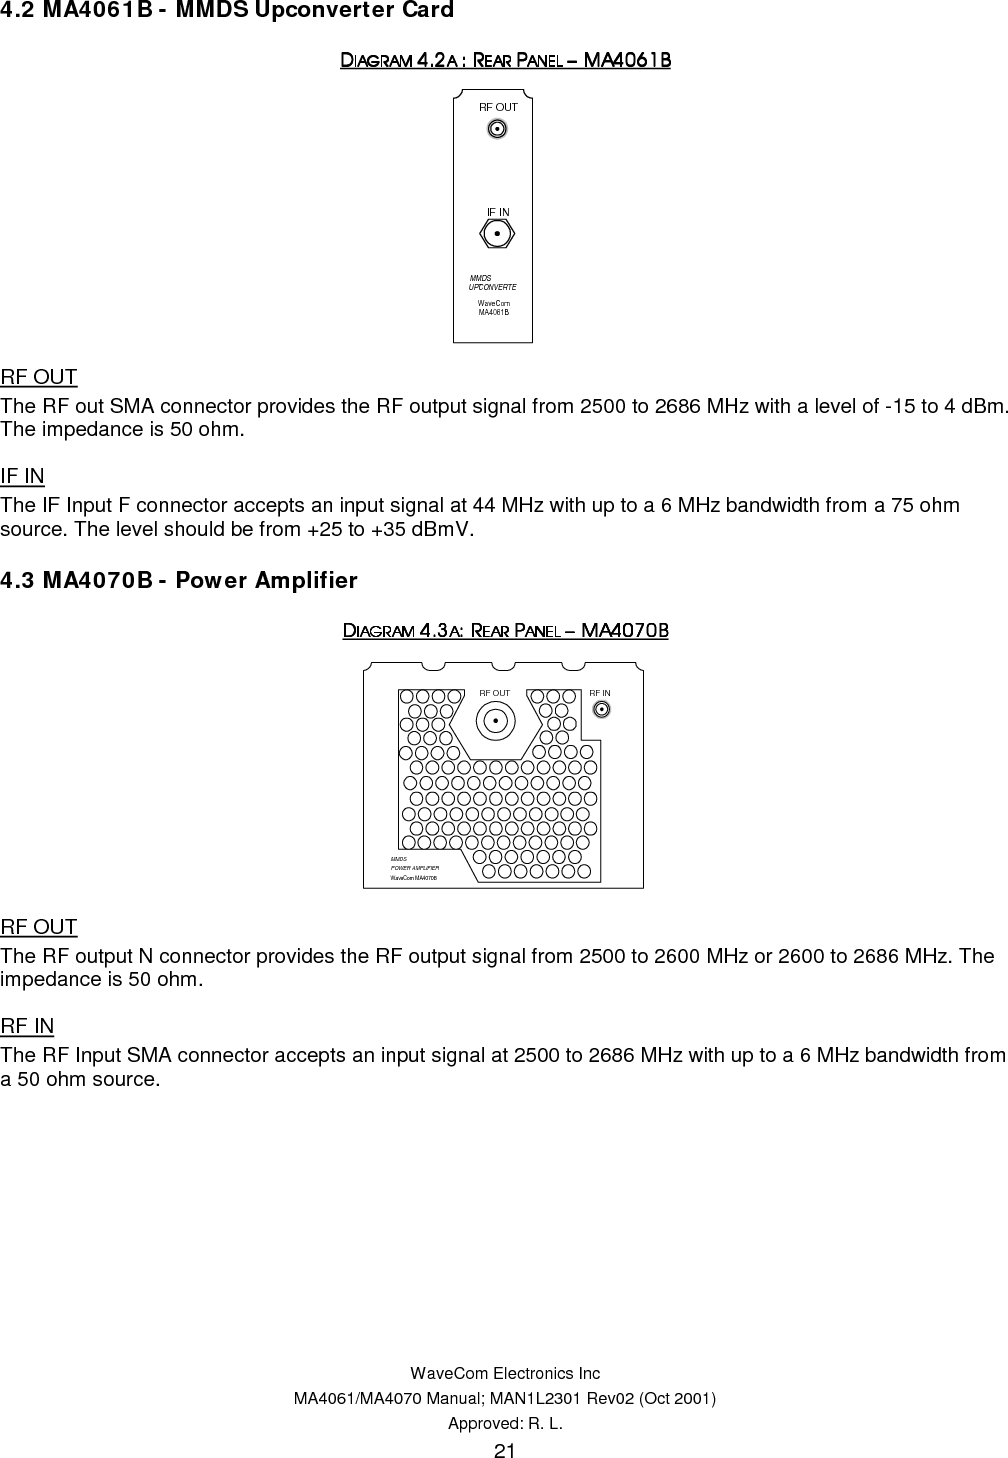   WaveCom Electronics Inc MA4061/MA4070 Manual; MAN1L2301 Rev02 (Oct 2001) Approved: R. L. 22  